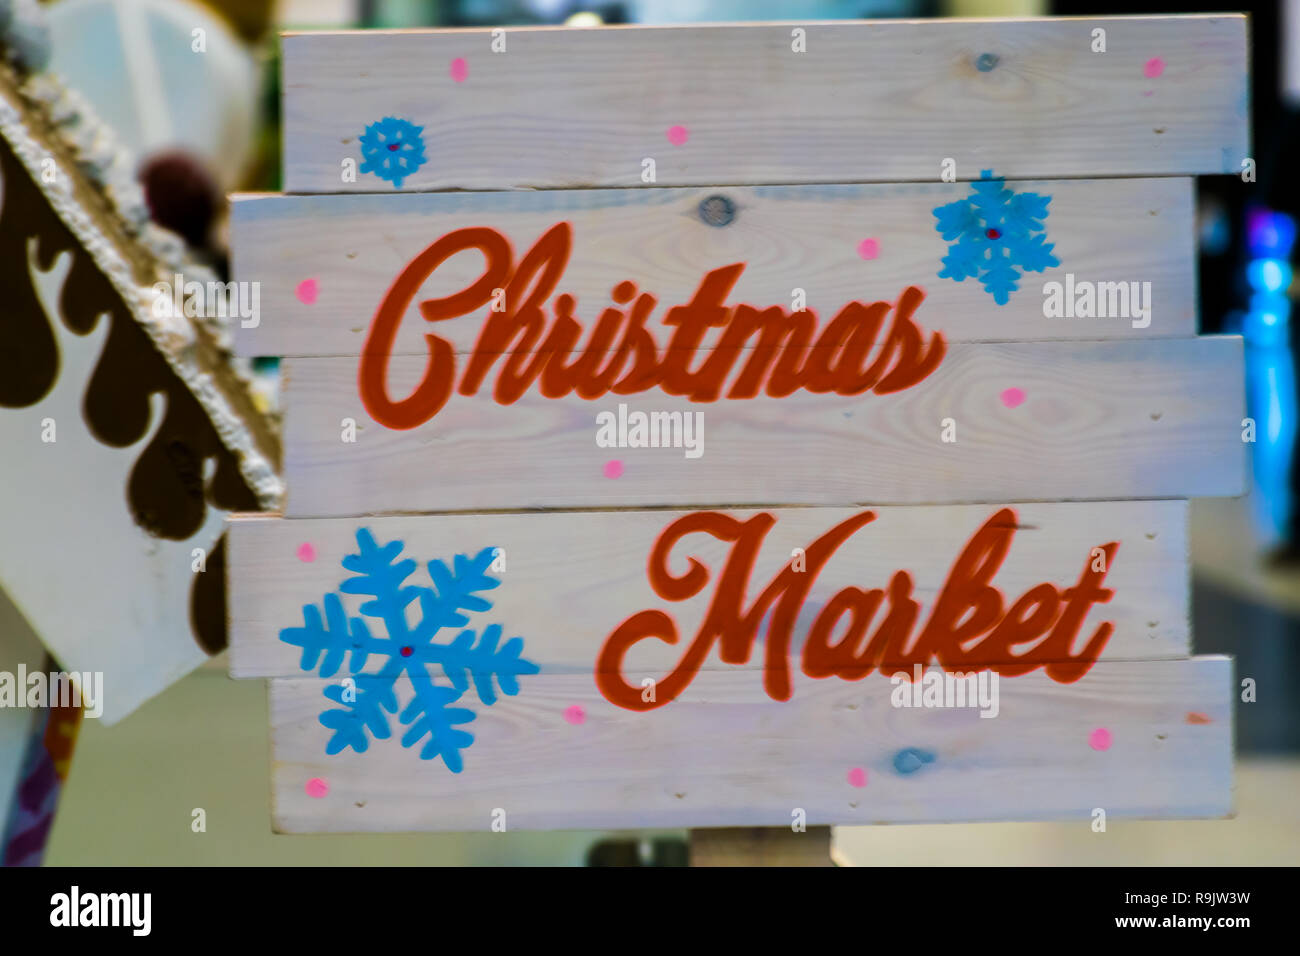 Christmas Market text banner Stock Photo